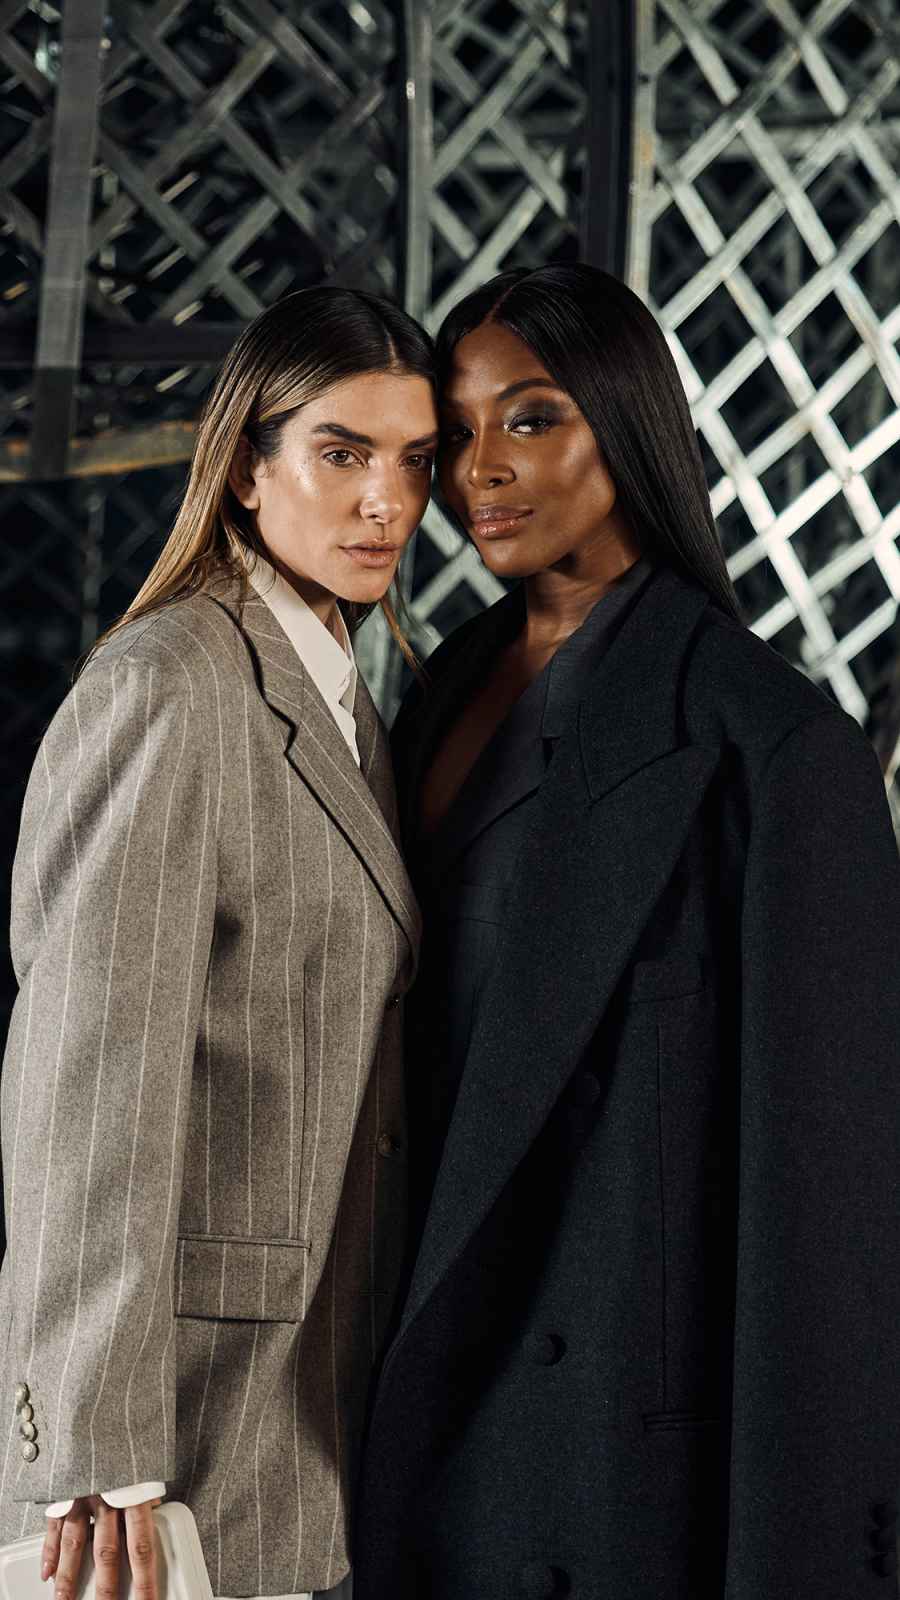 Valentina Ferrer & Naomi Campbell backstage at BOSS’s Fall/Winter 2022 runway show during Milan Fashion Week